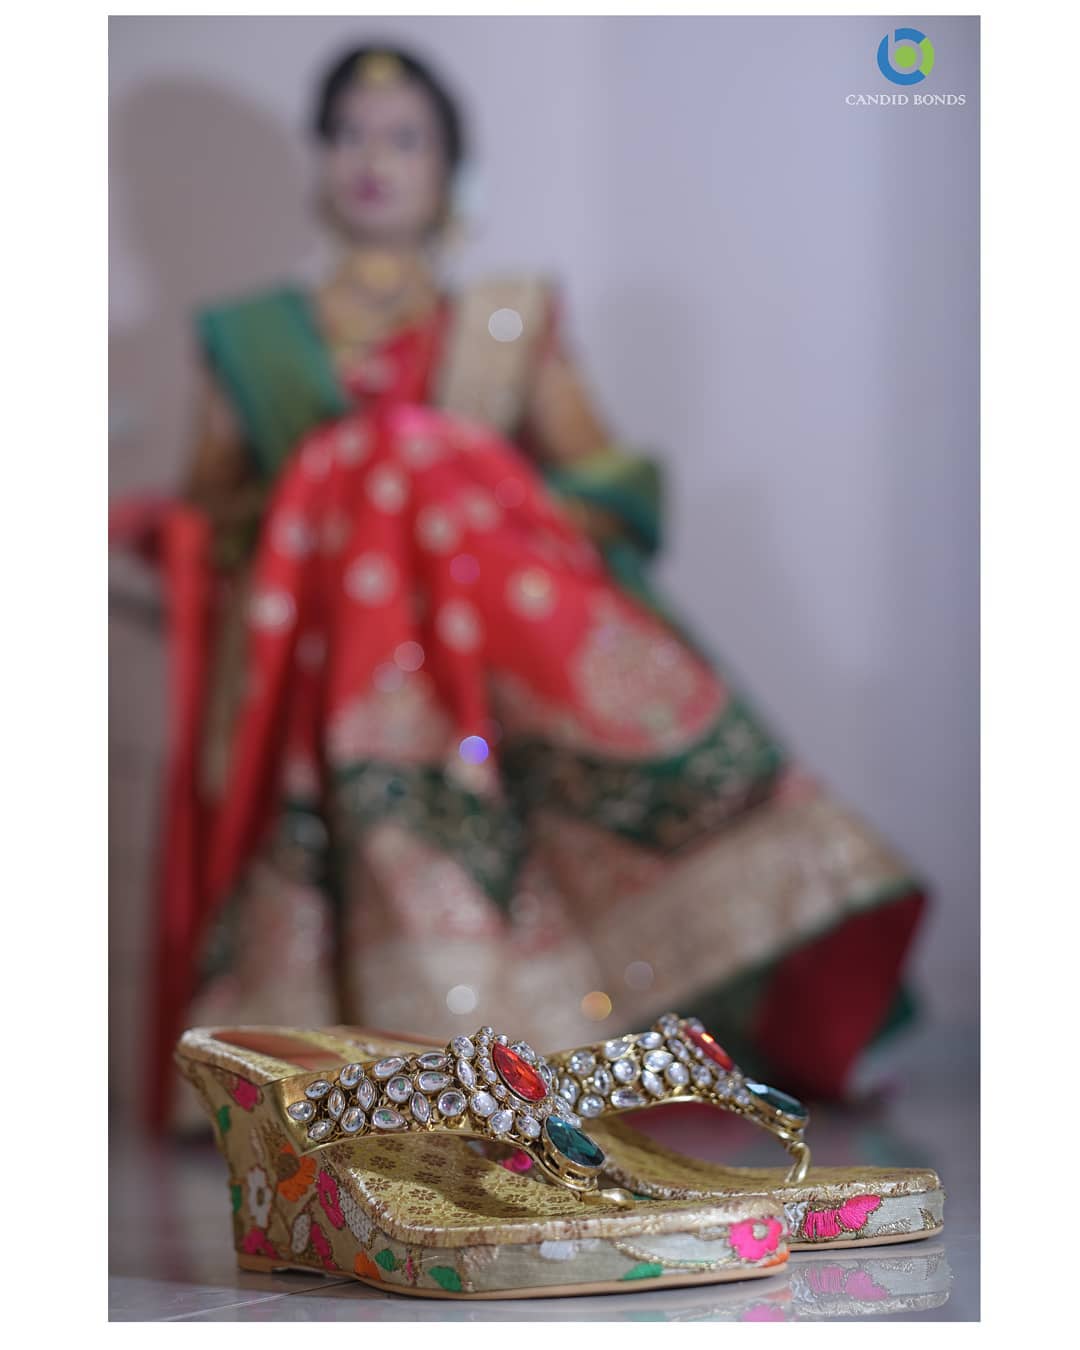 comfortable bridal shoes